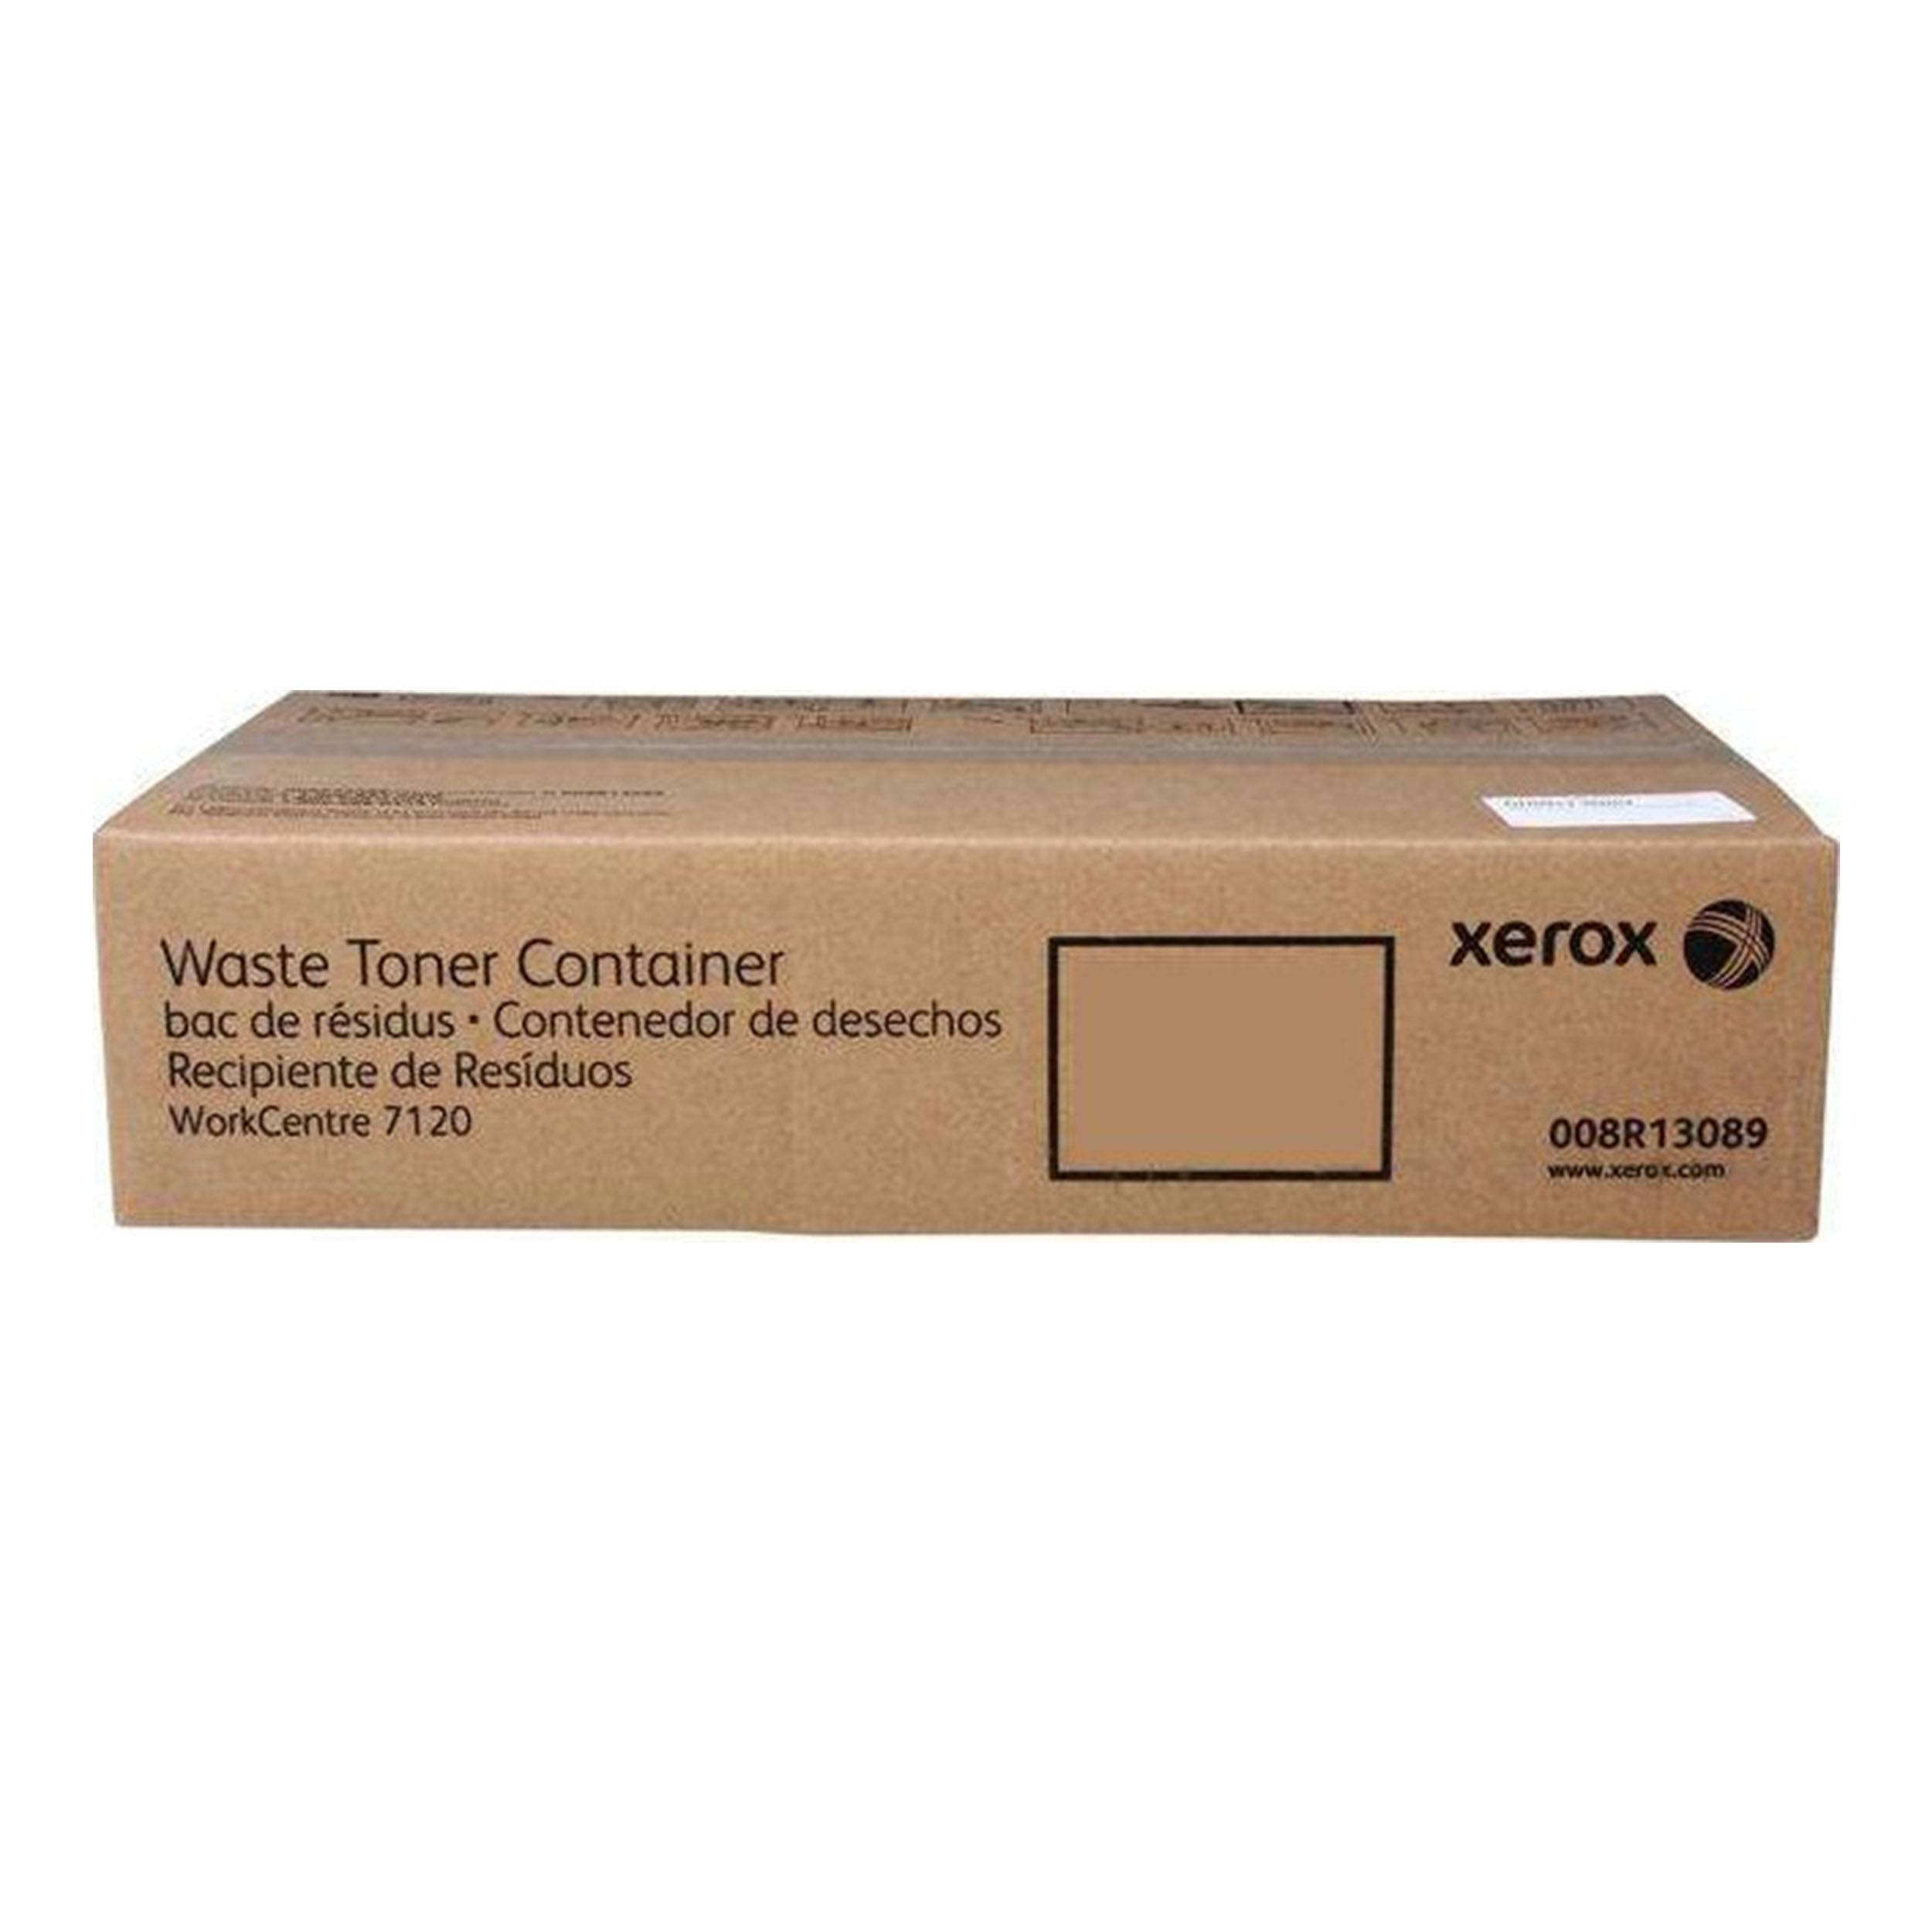 Xerox waste toner